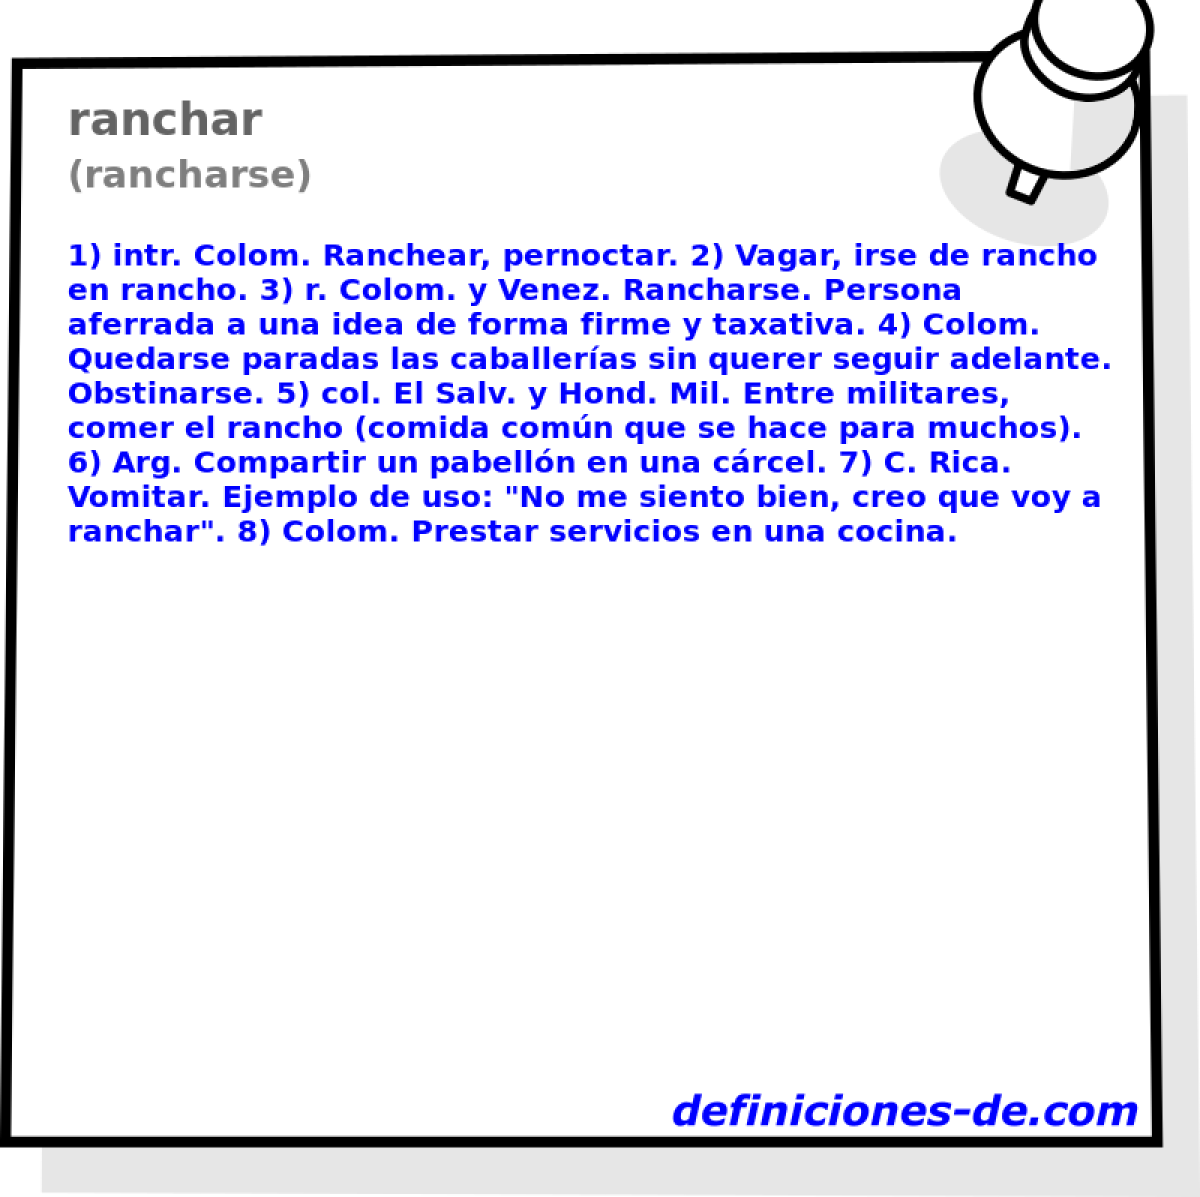 ranchar (rancharse)